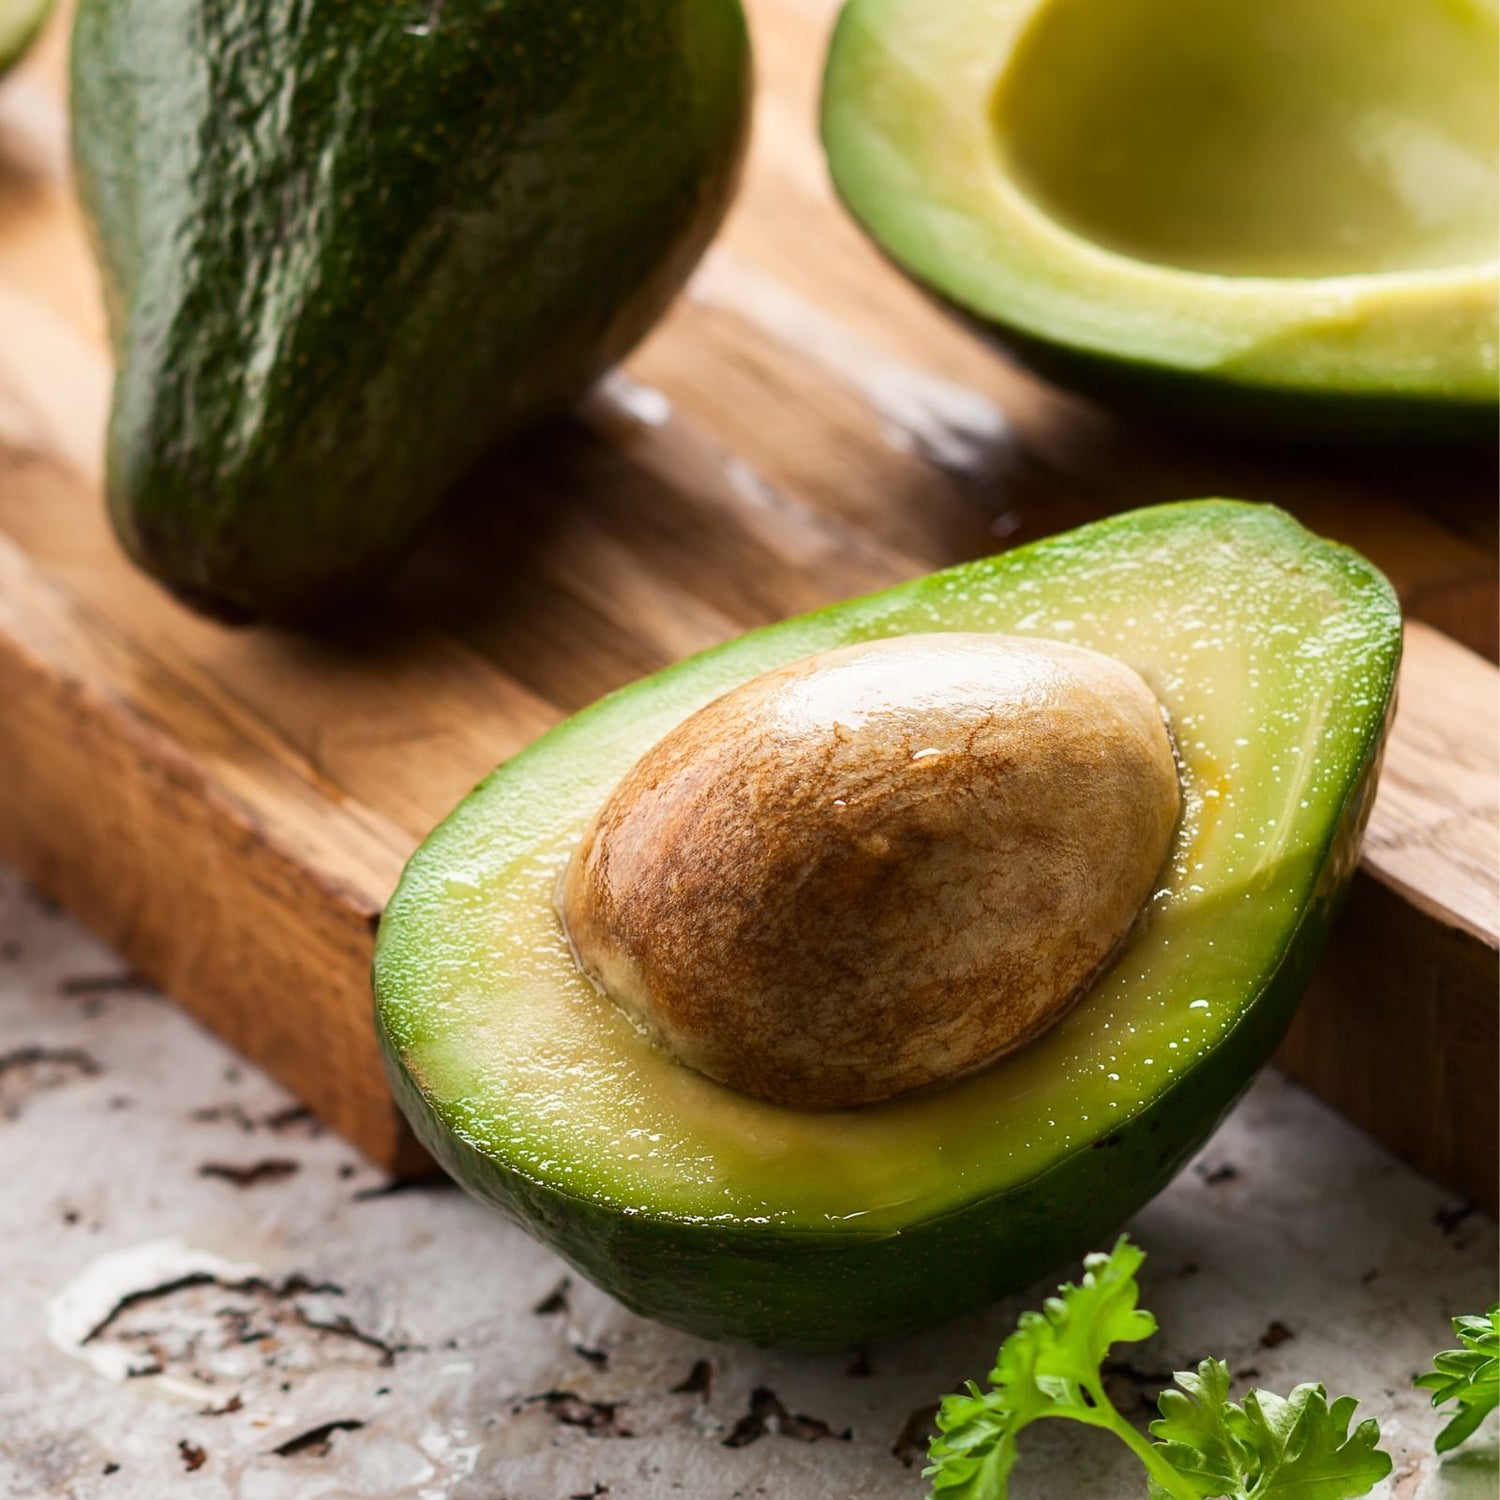 7 Foods to Make Your Skin Glow skin food walnuts avocados 